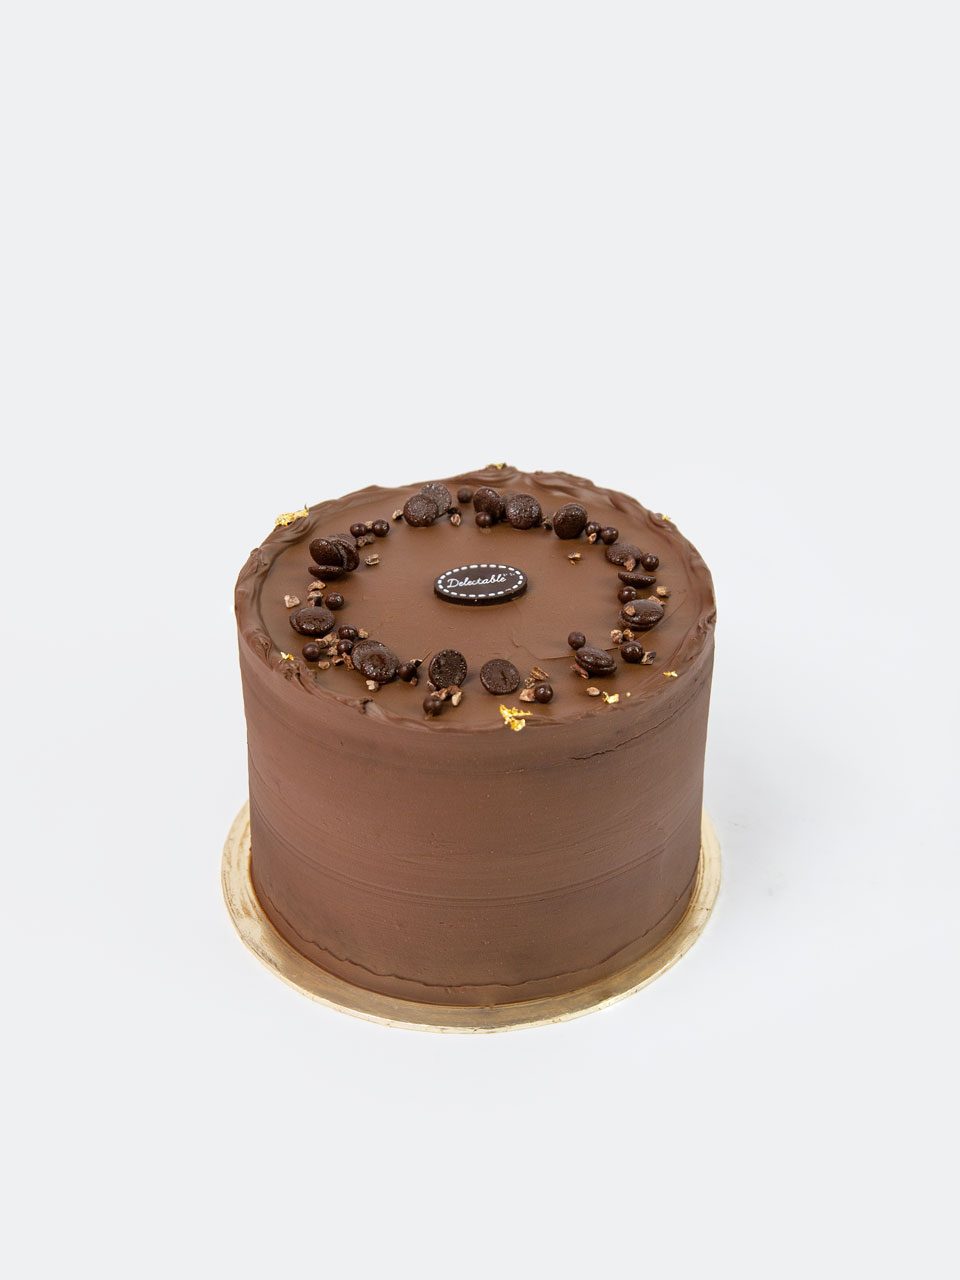 Delectable Vegan Dark Chocolate Fudge Cake - Online cake delivery Malaysia